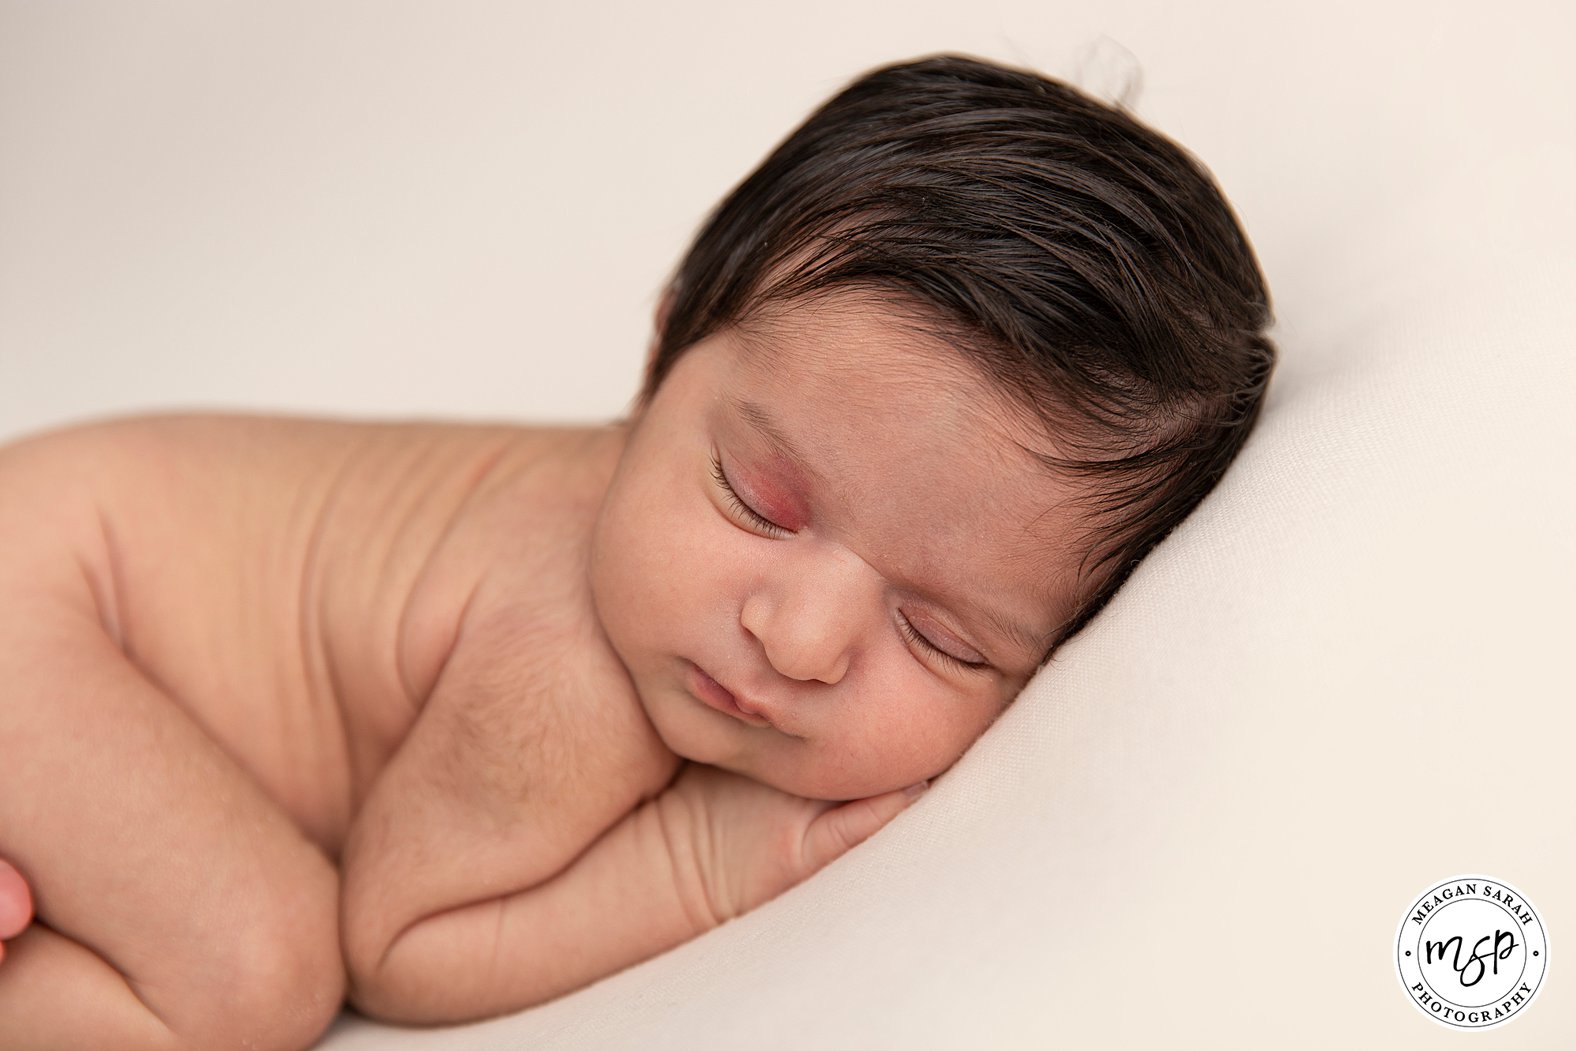 Newborn Photography,Baby Photography,Baby Girl,Leeds,Newborn Photographer Leeds,Leeds baby pictures,